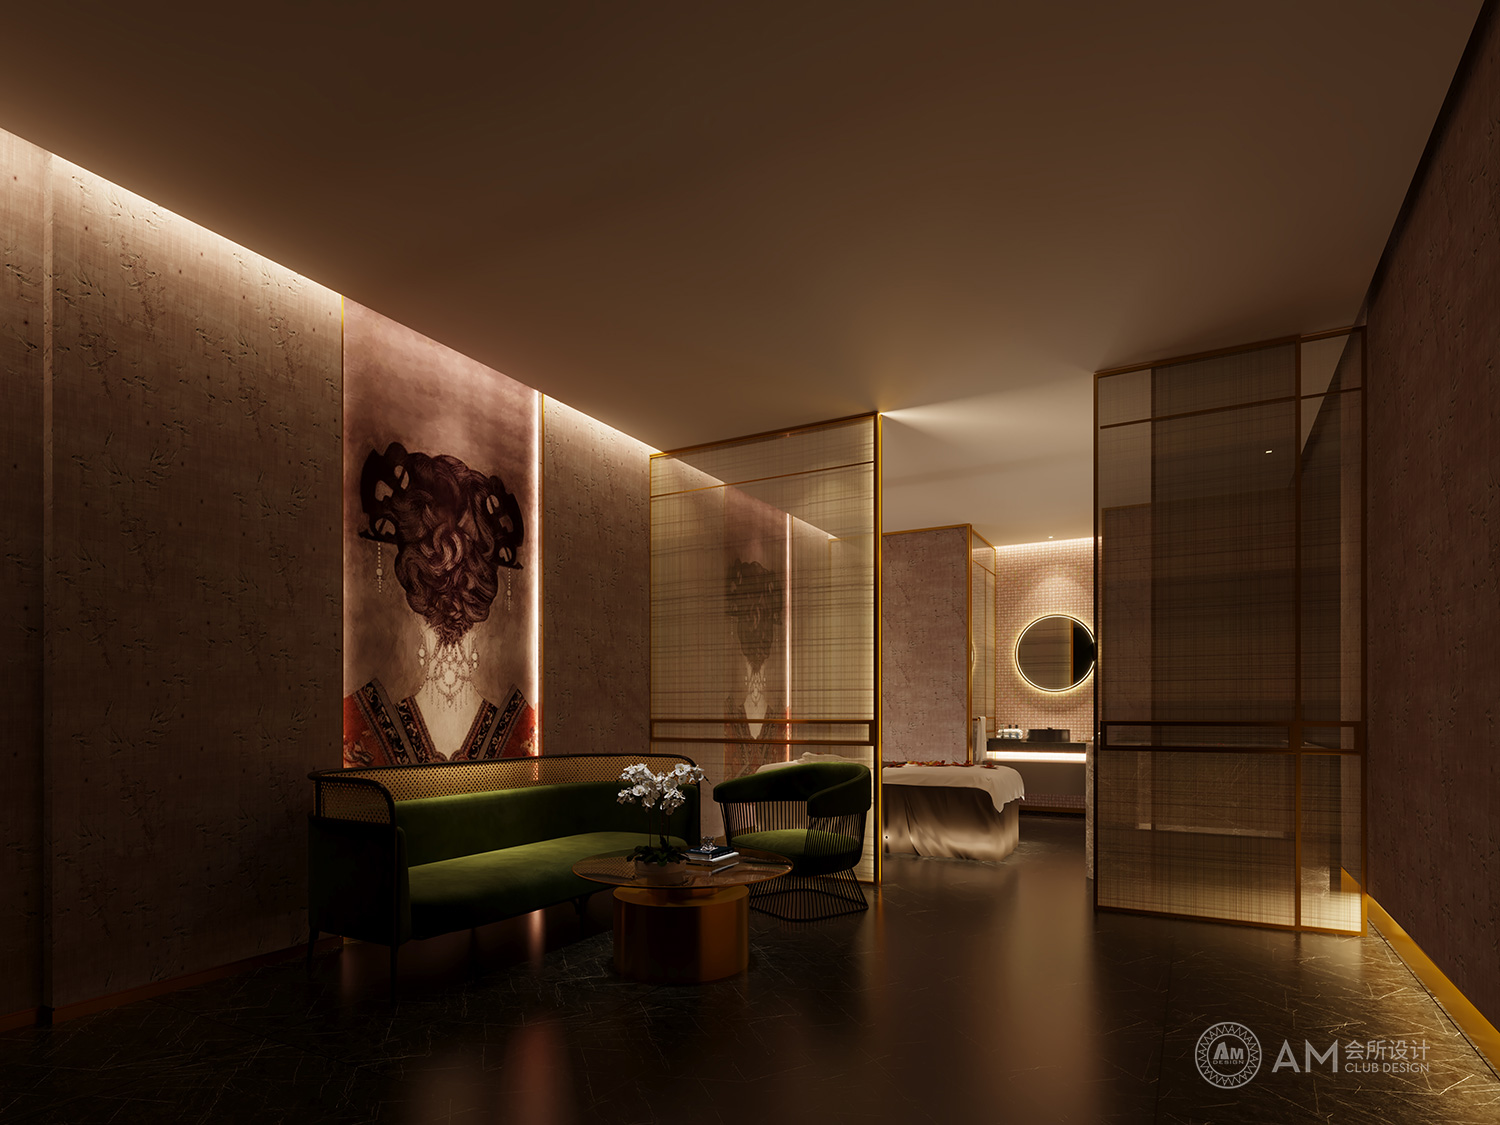 AM DESIGN | Spa room design of lishiyuan Spa Club